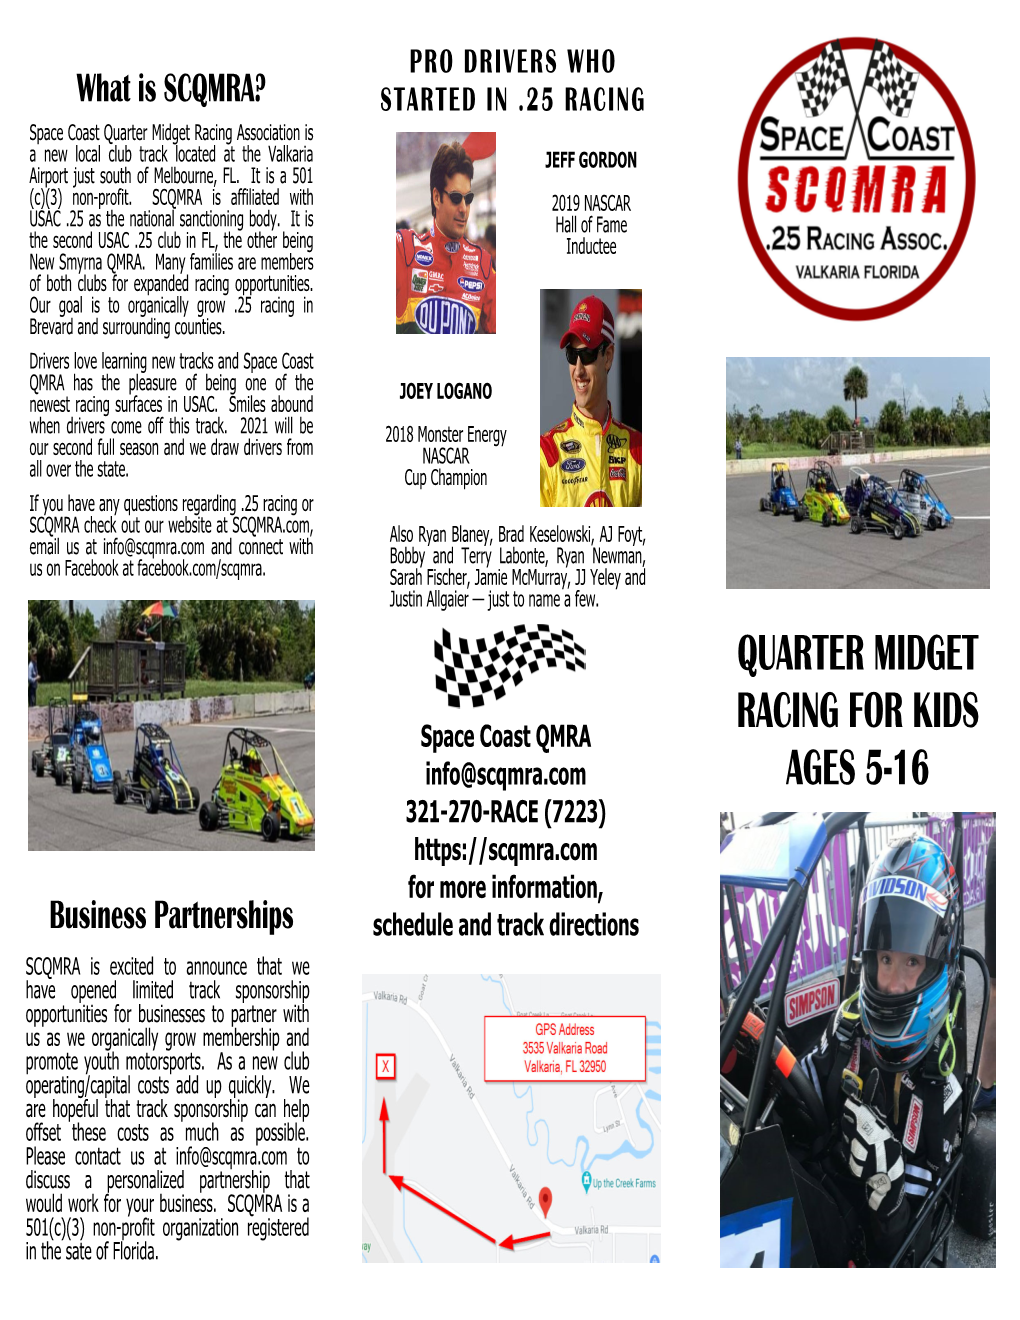 Quarter Midget Racing for Kids Ages 5-16